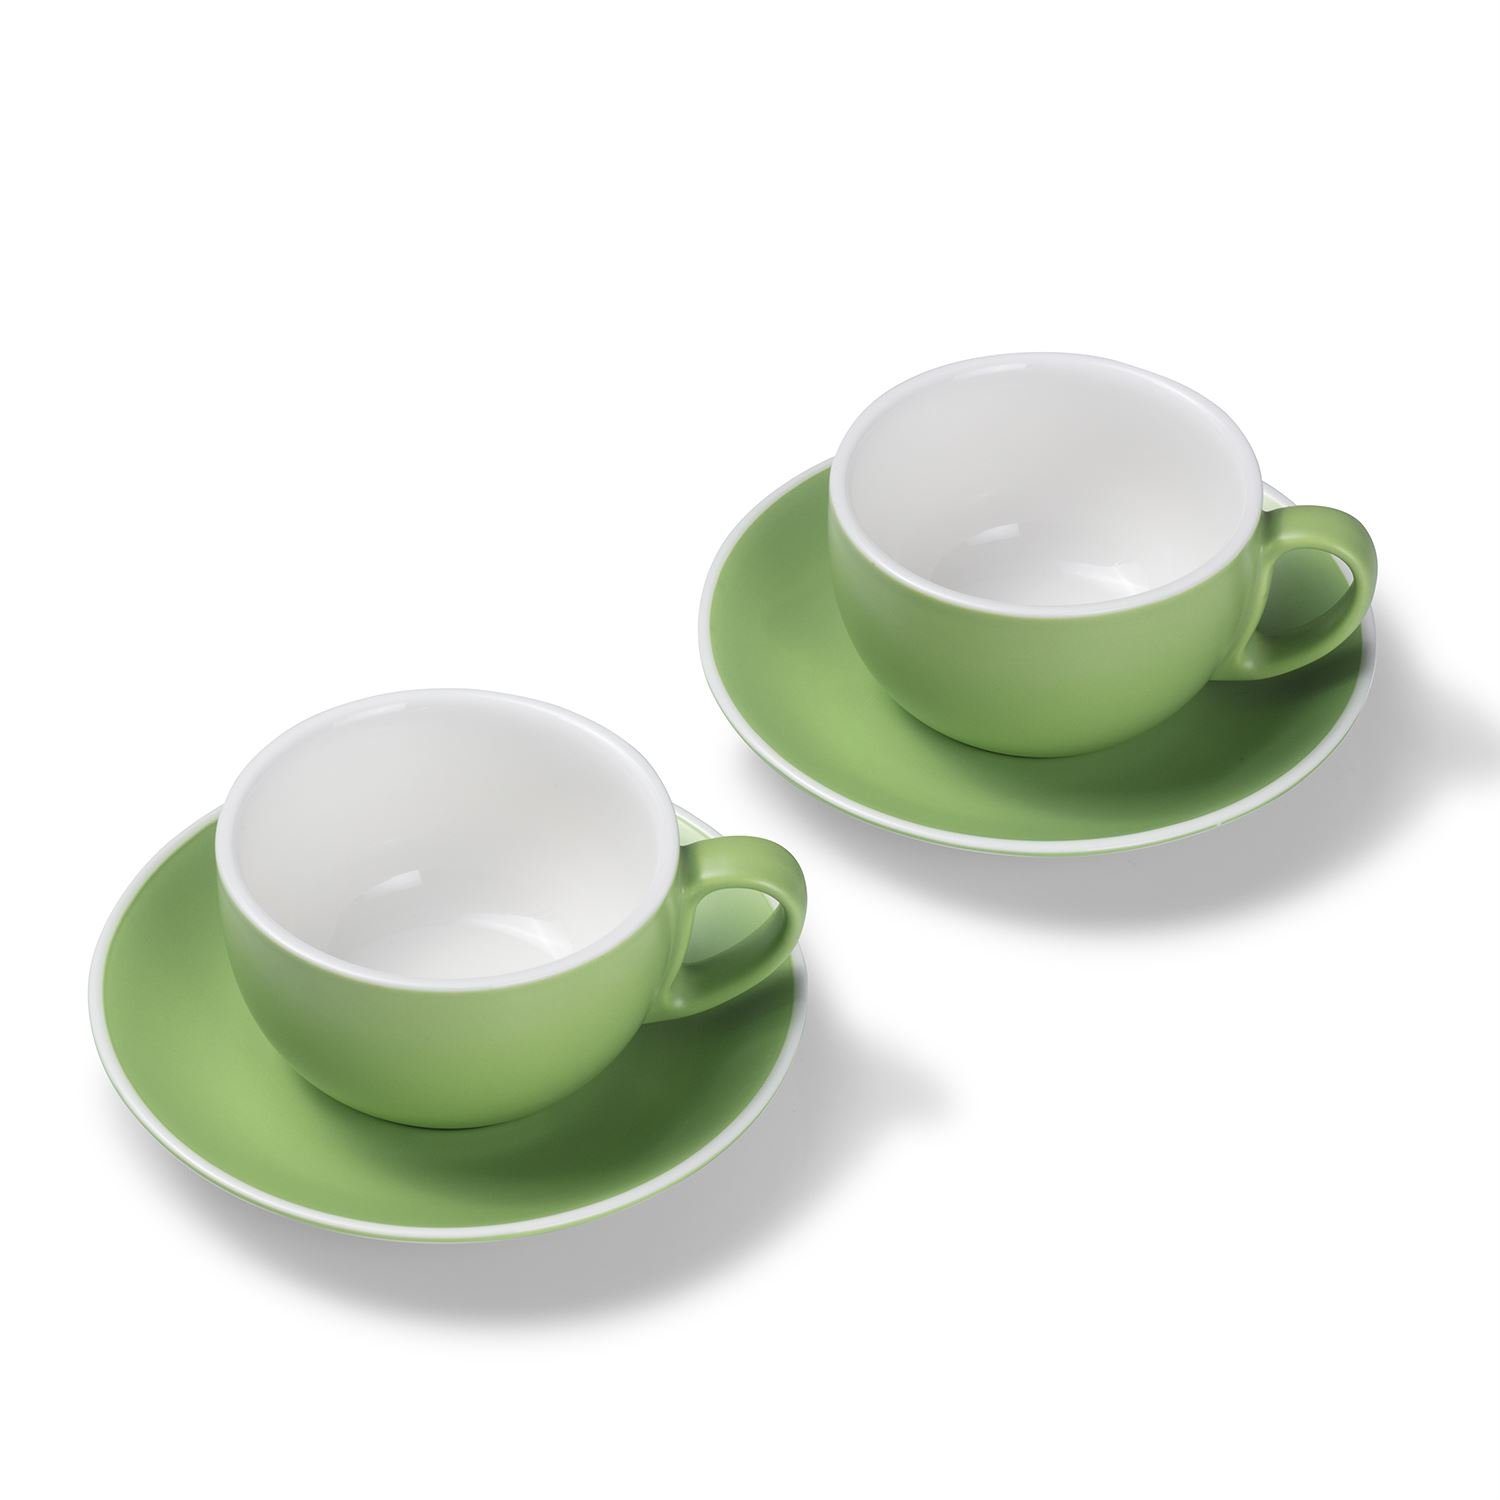 billige Originalprodukte Terra Home matt, Home Tasse Porzellan Terra 2er Grün Milchkaffeetassen-Set